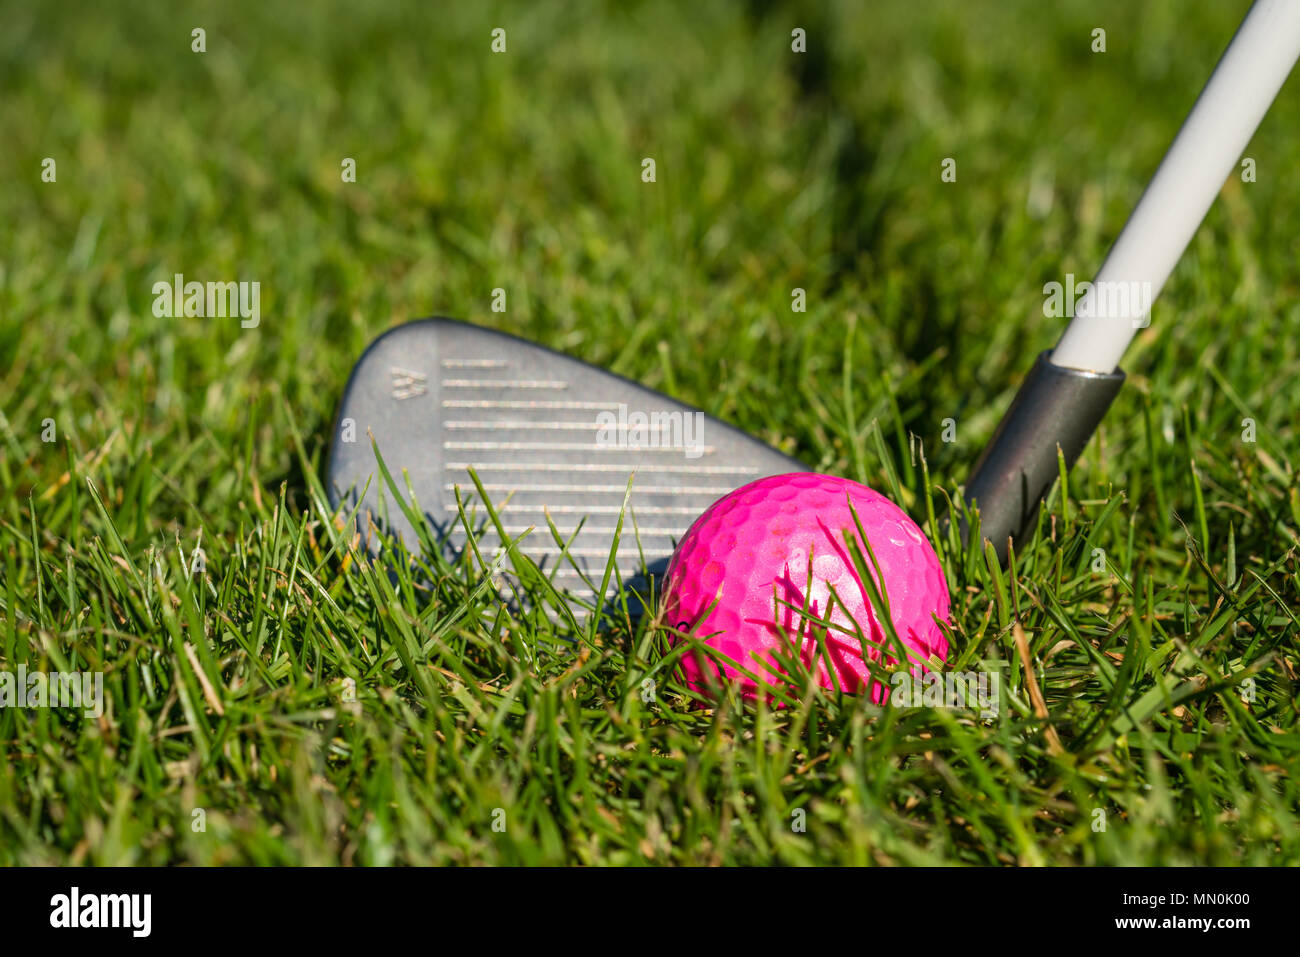 A golf club behind a pink golf ball Stock Photo